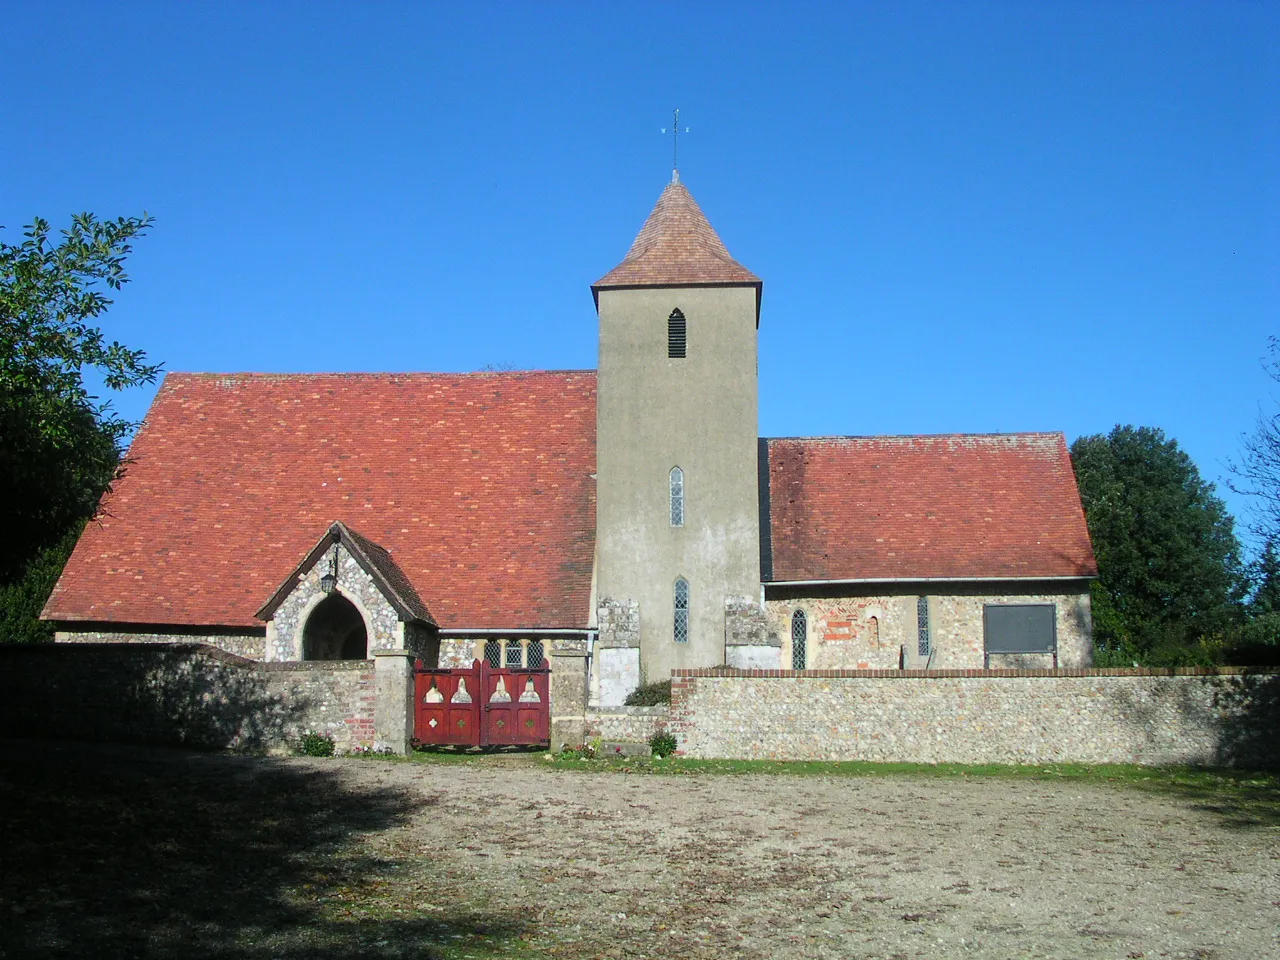 Photo showing: Westhampnett parish church, West Sussex, England.